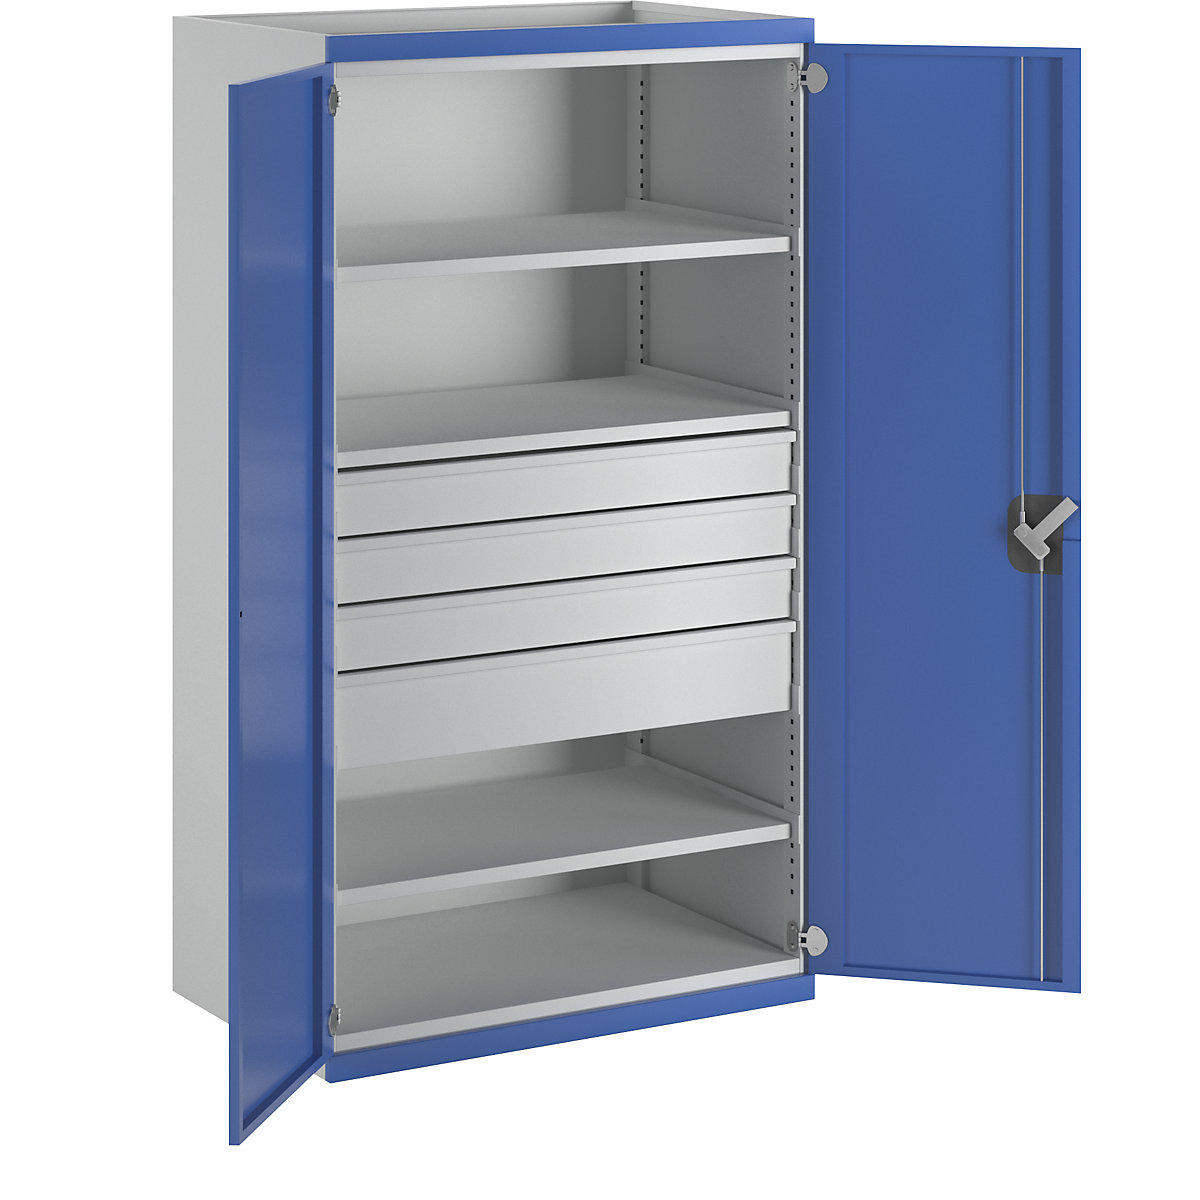 Heavy duty cupboard with 3 shelves – ANKE